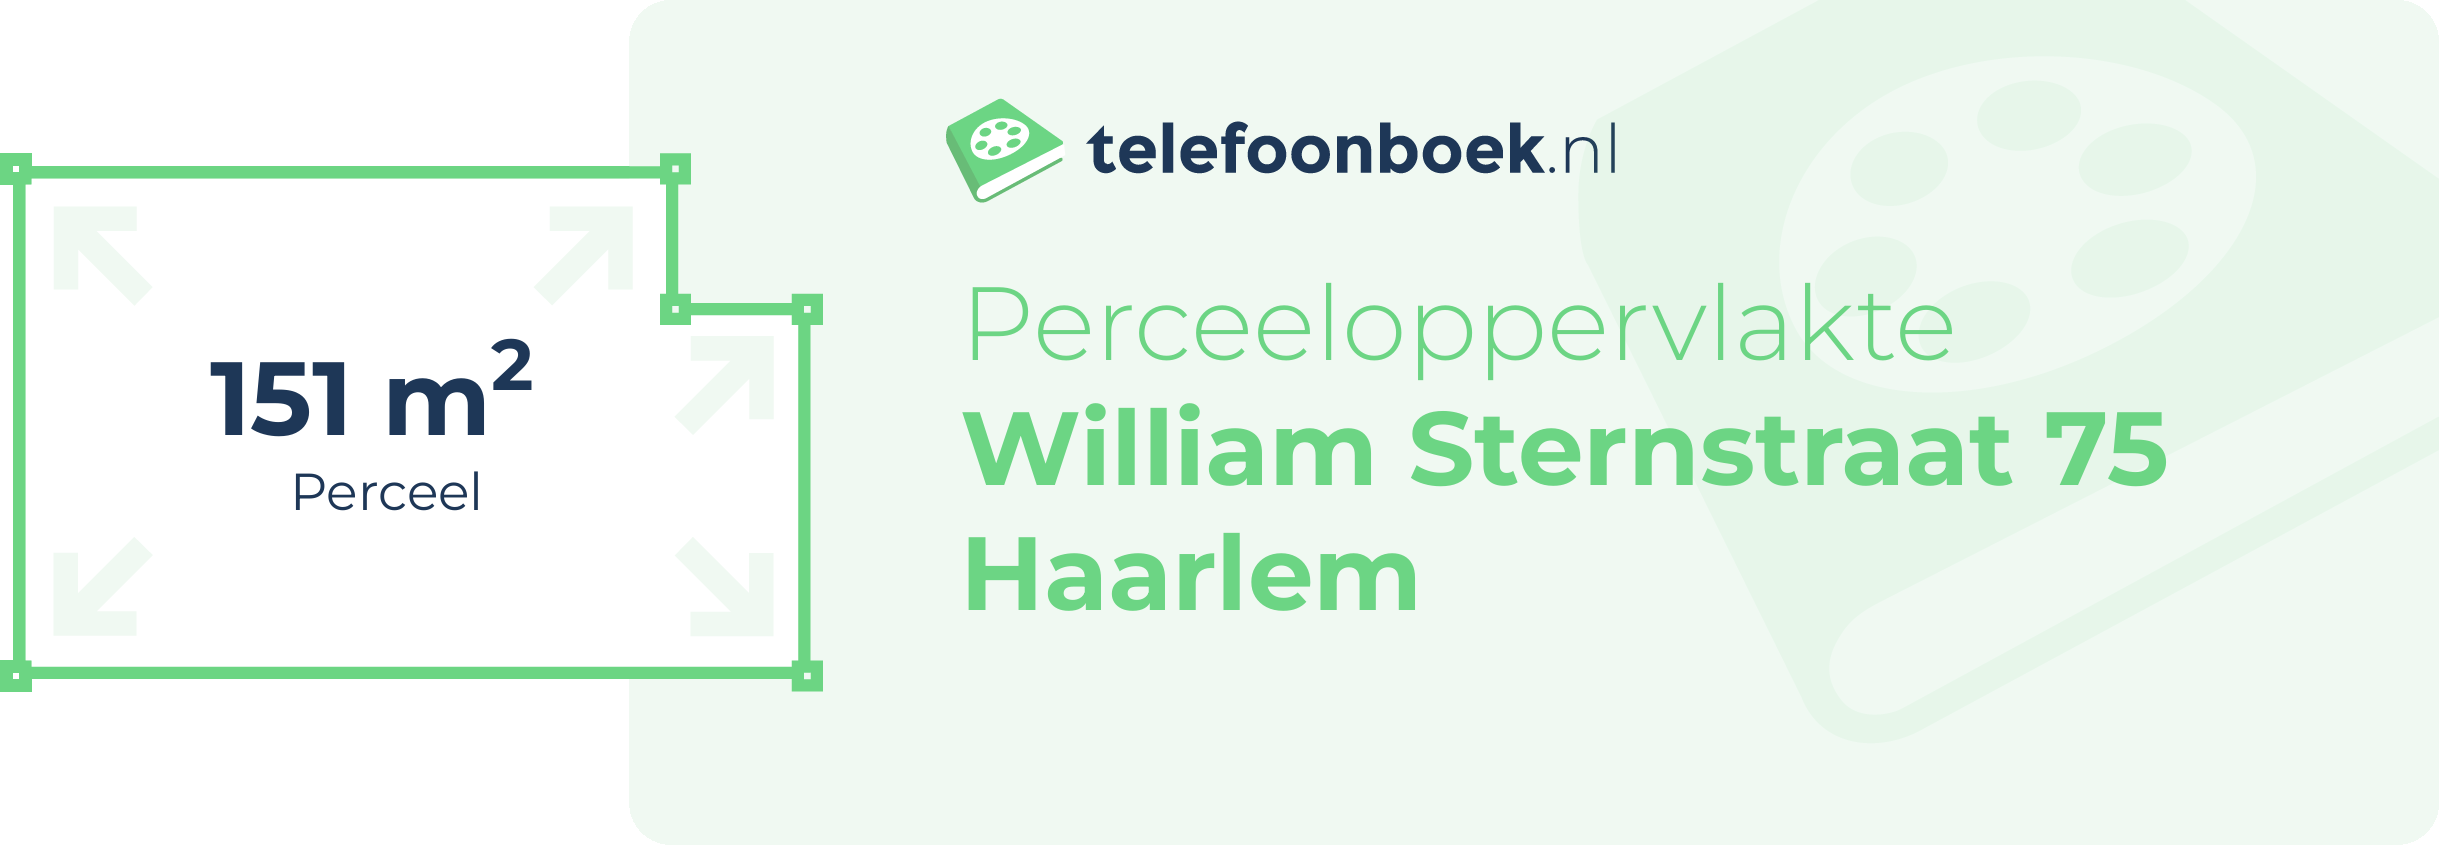 Perceeloppervlakte William Sternstraat 75 Haarlem